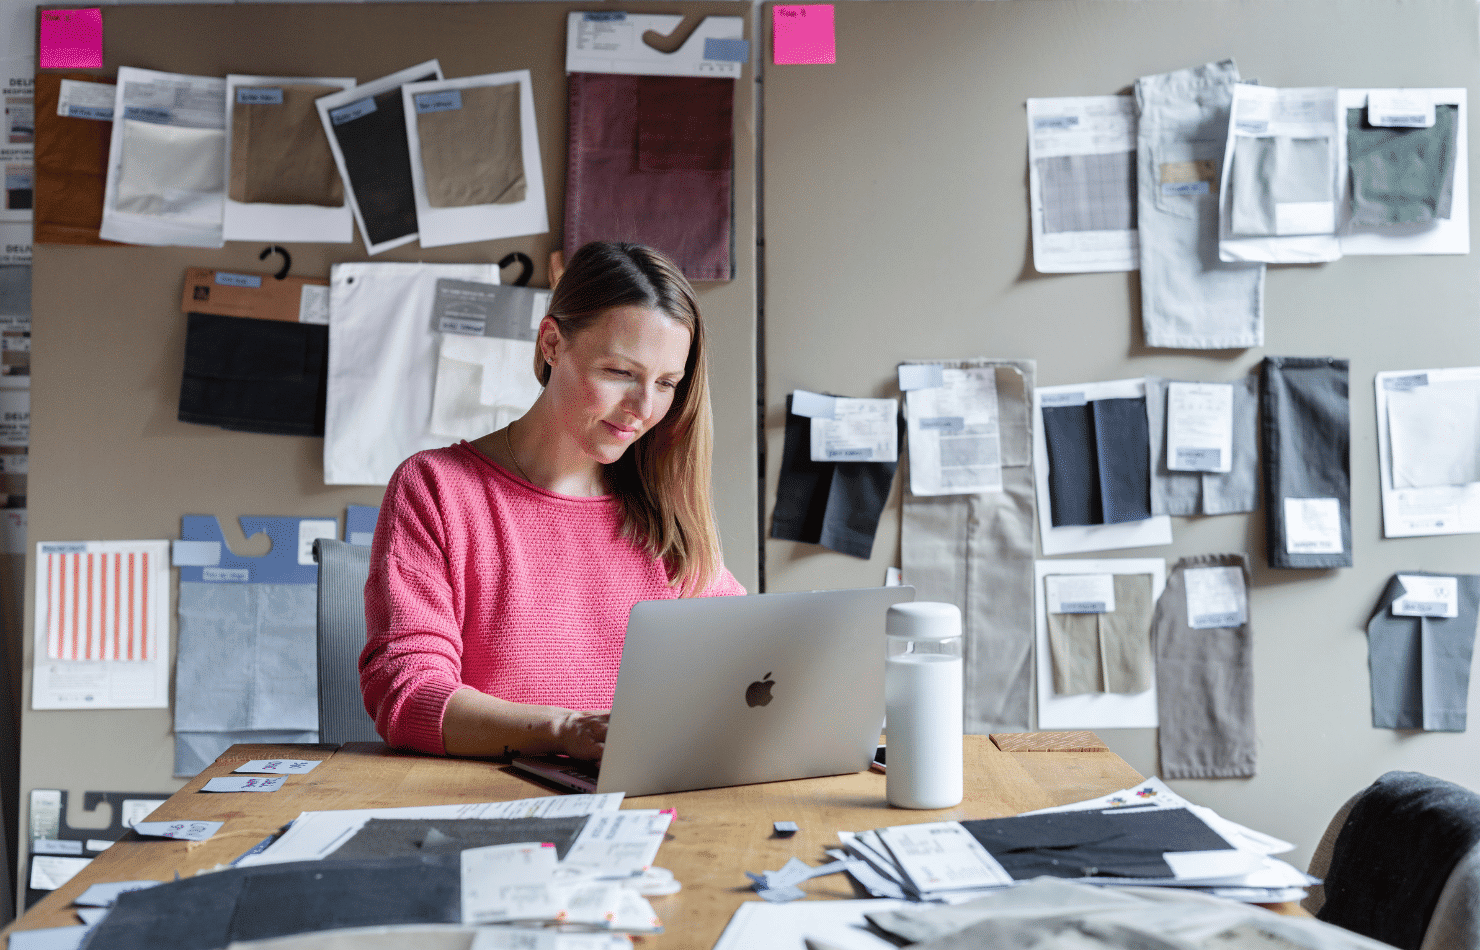 Fashion designer in office using a MacBook